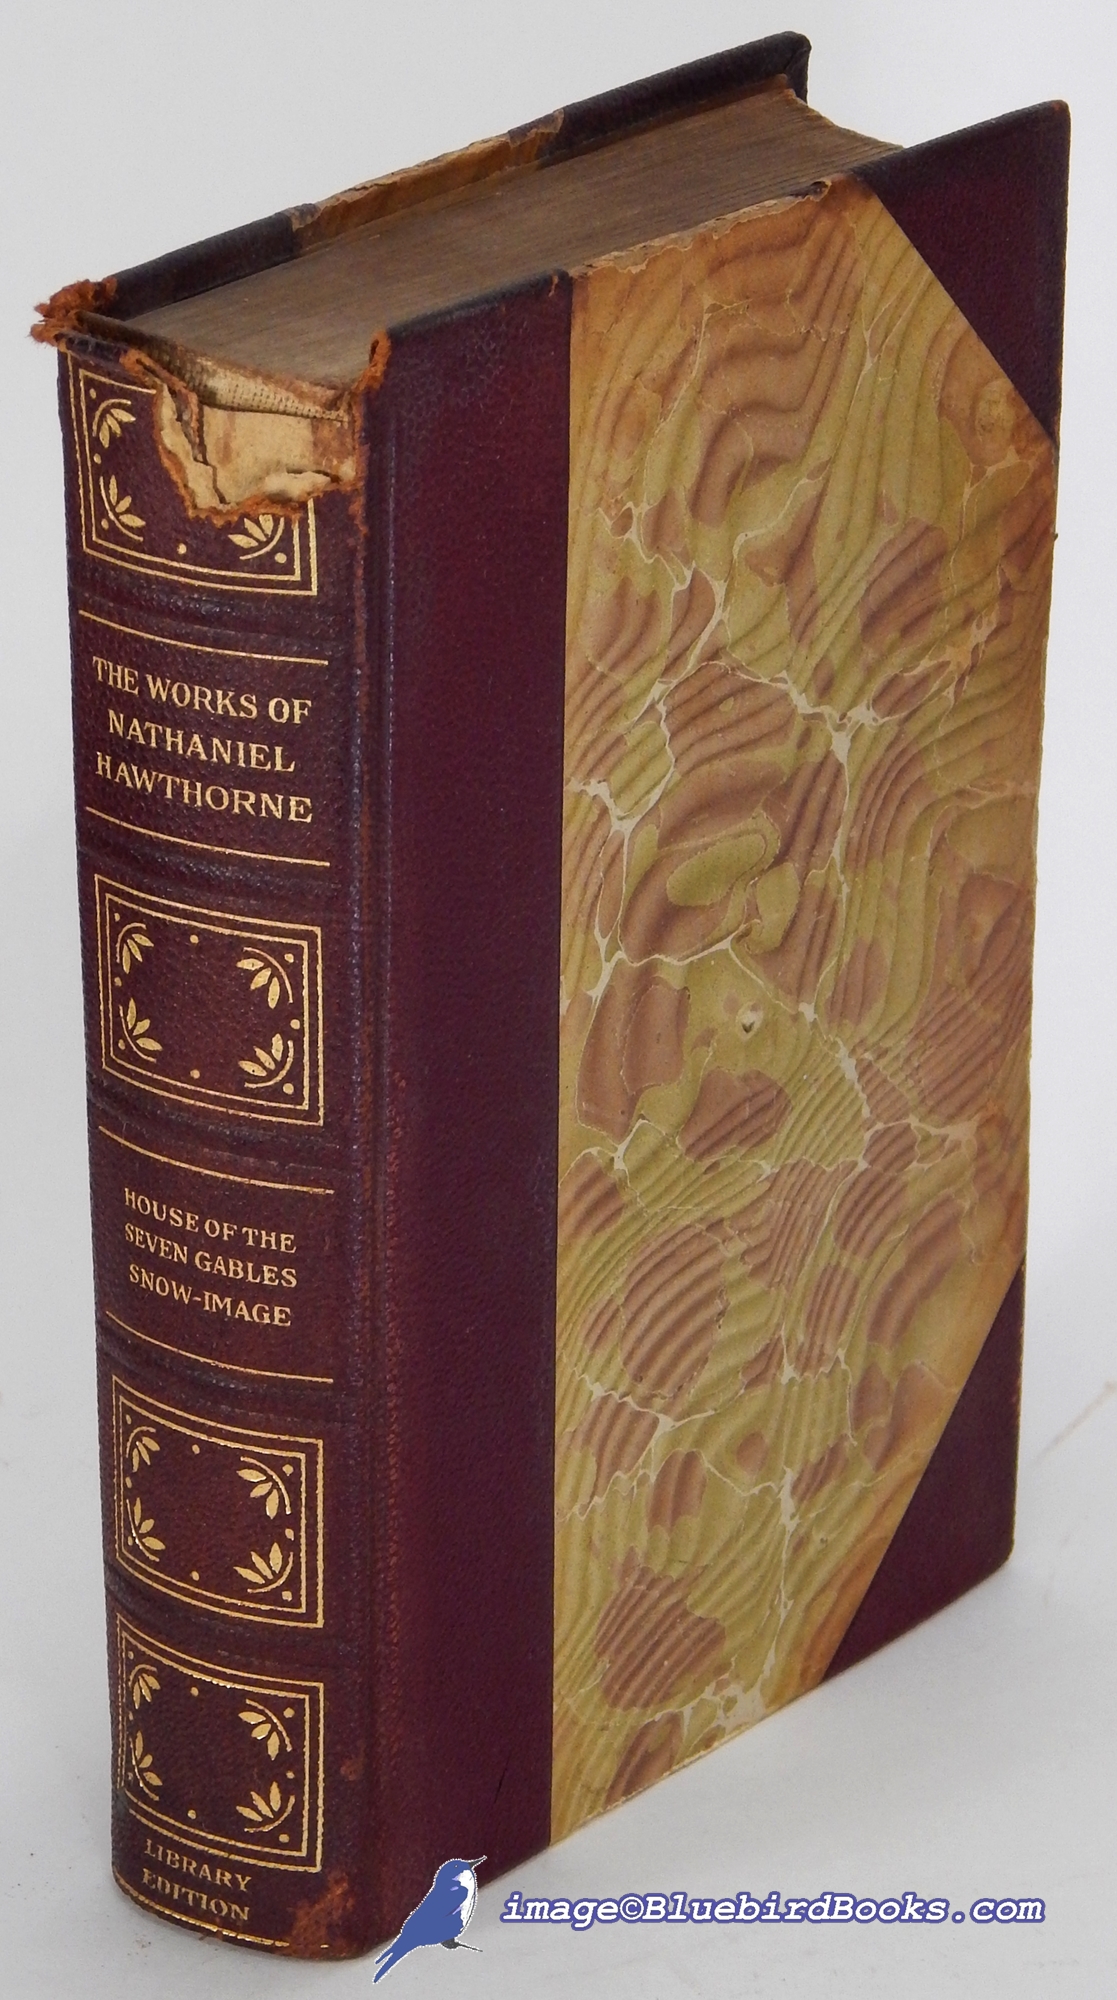 HAWTHORNE, NATHANIEL - The Works of Nathaniel Hawthorne: Near-Complete 10 Volume Set